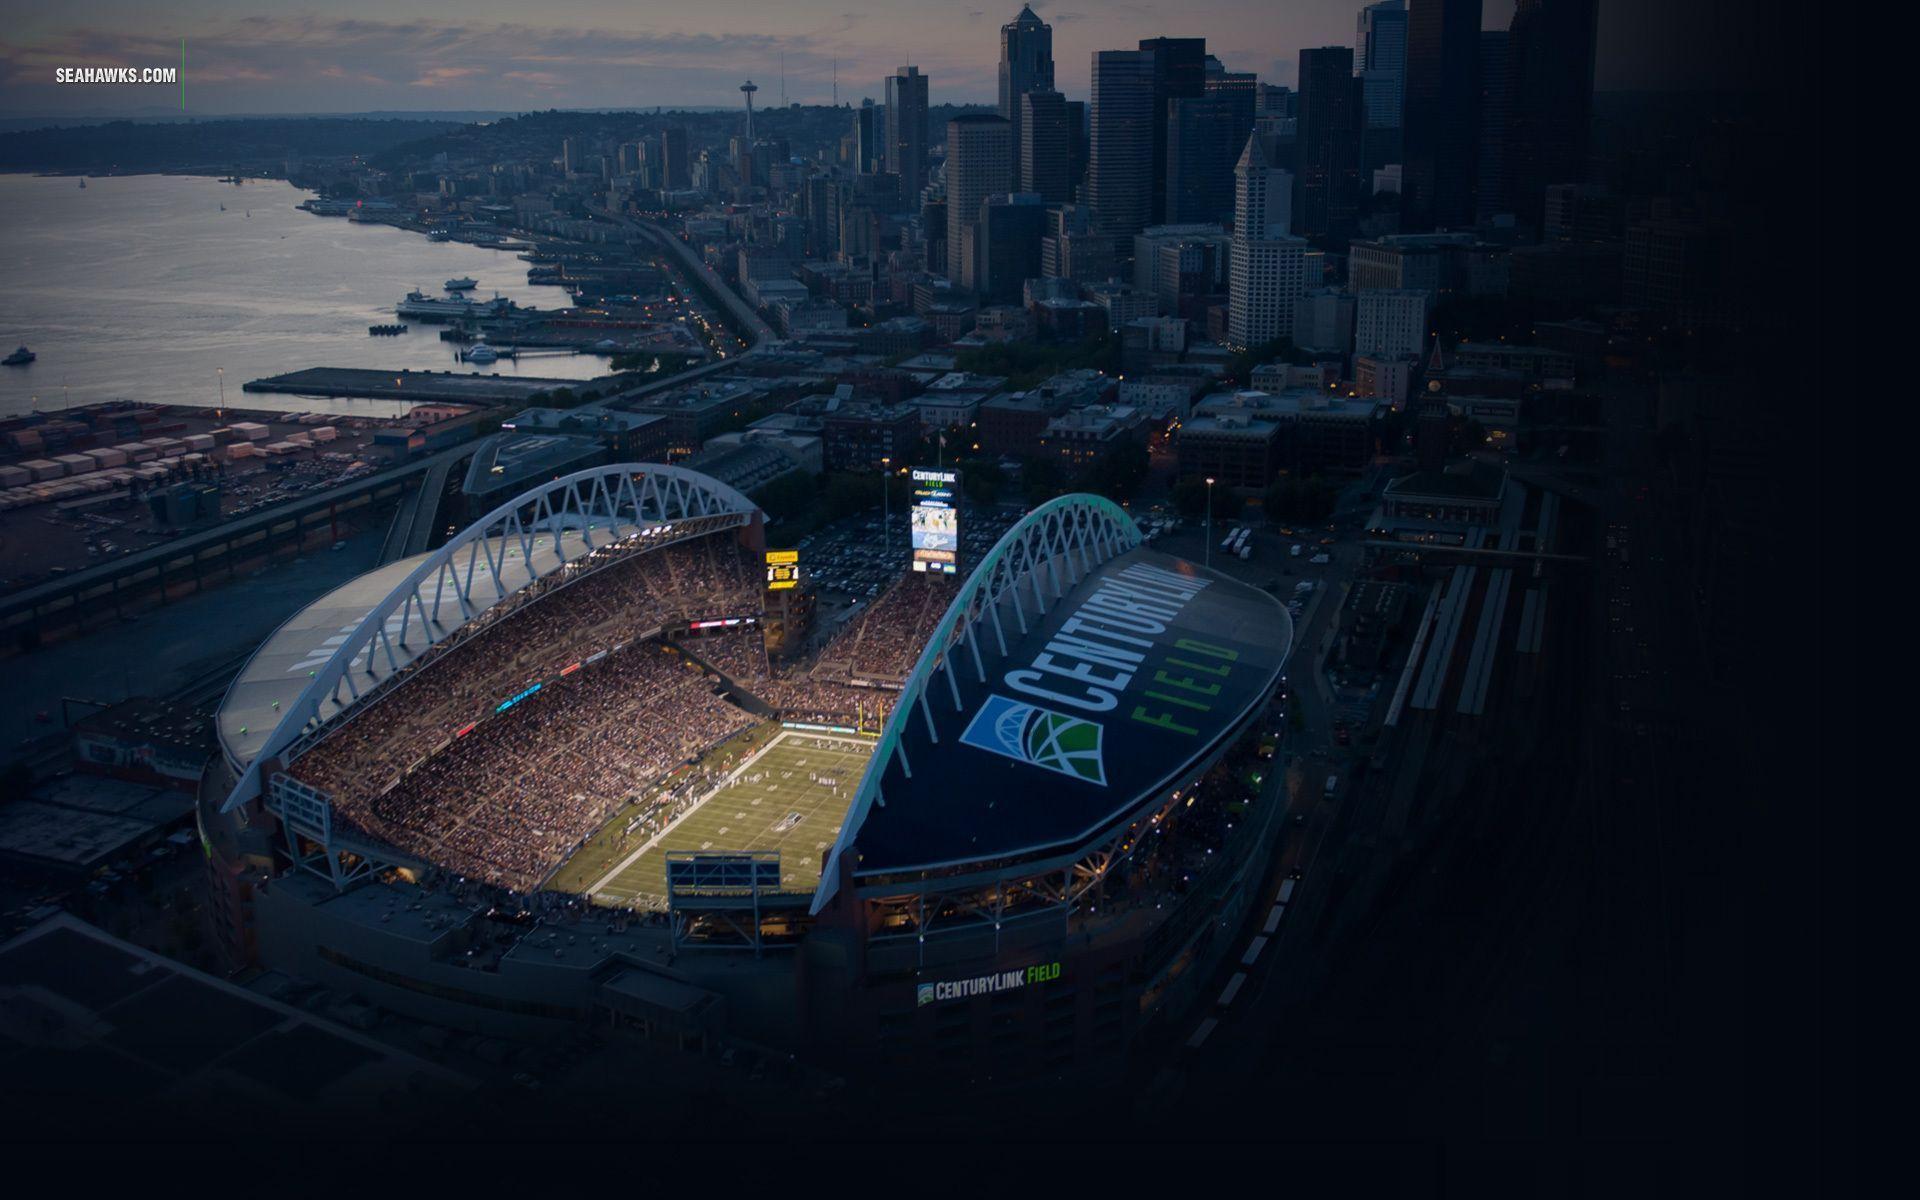 Seattle Seahawks Stadium HD Wallpaper 55975 1920x1200px